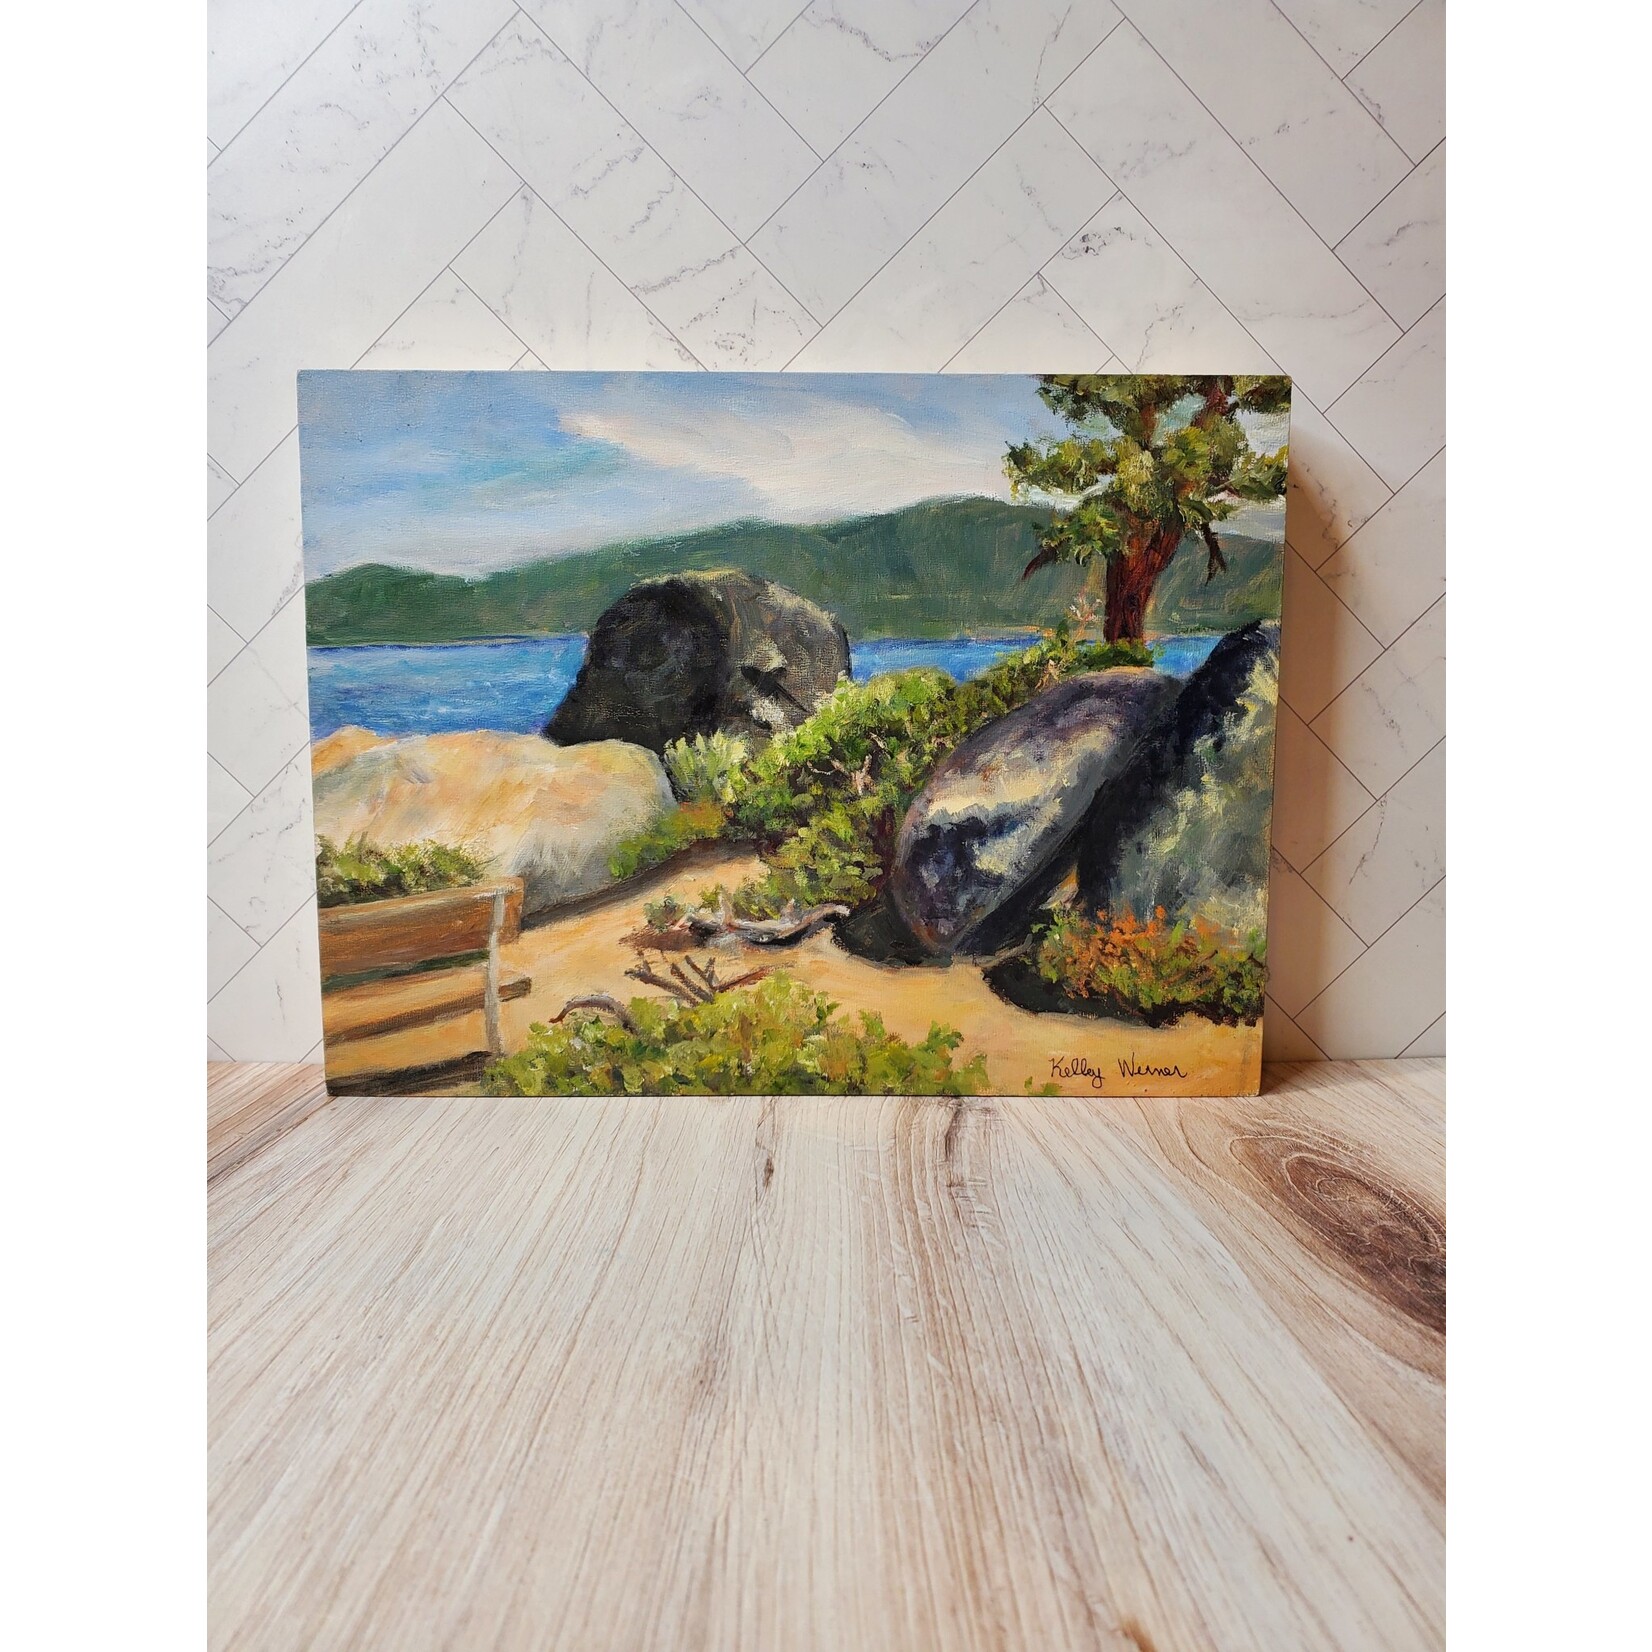 Kelley Werner Arts "Summer Day at Sand Harbor" - Original Oil on Birch Panel